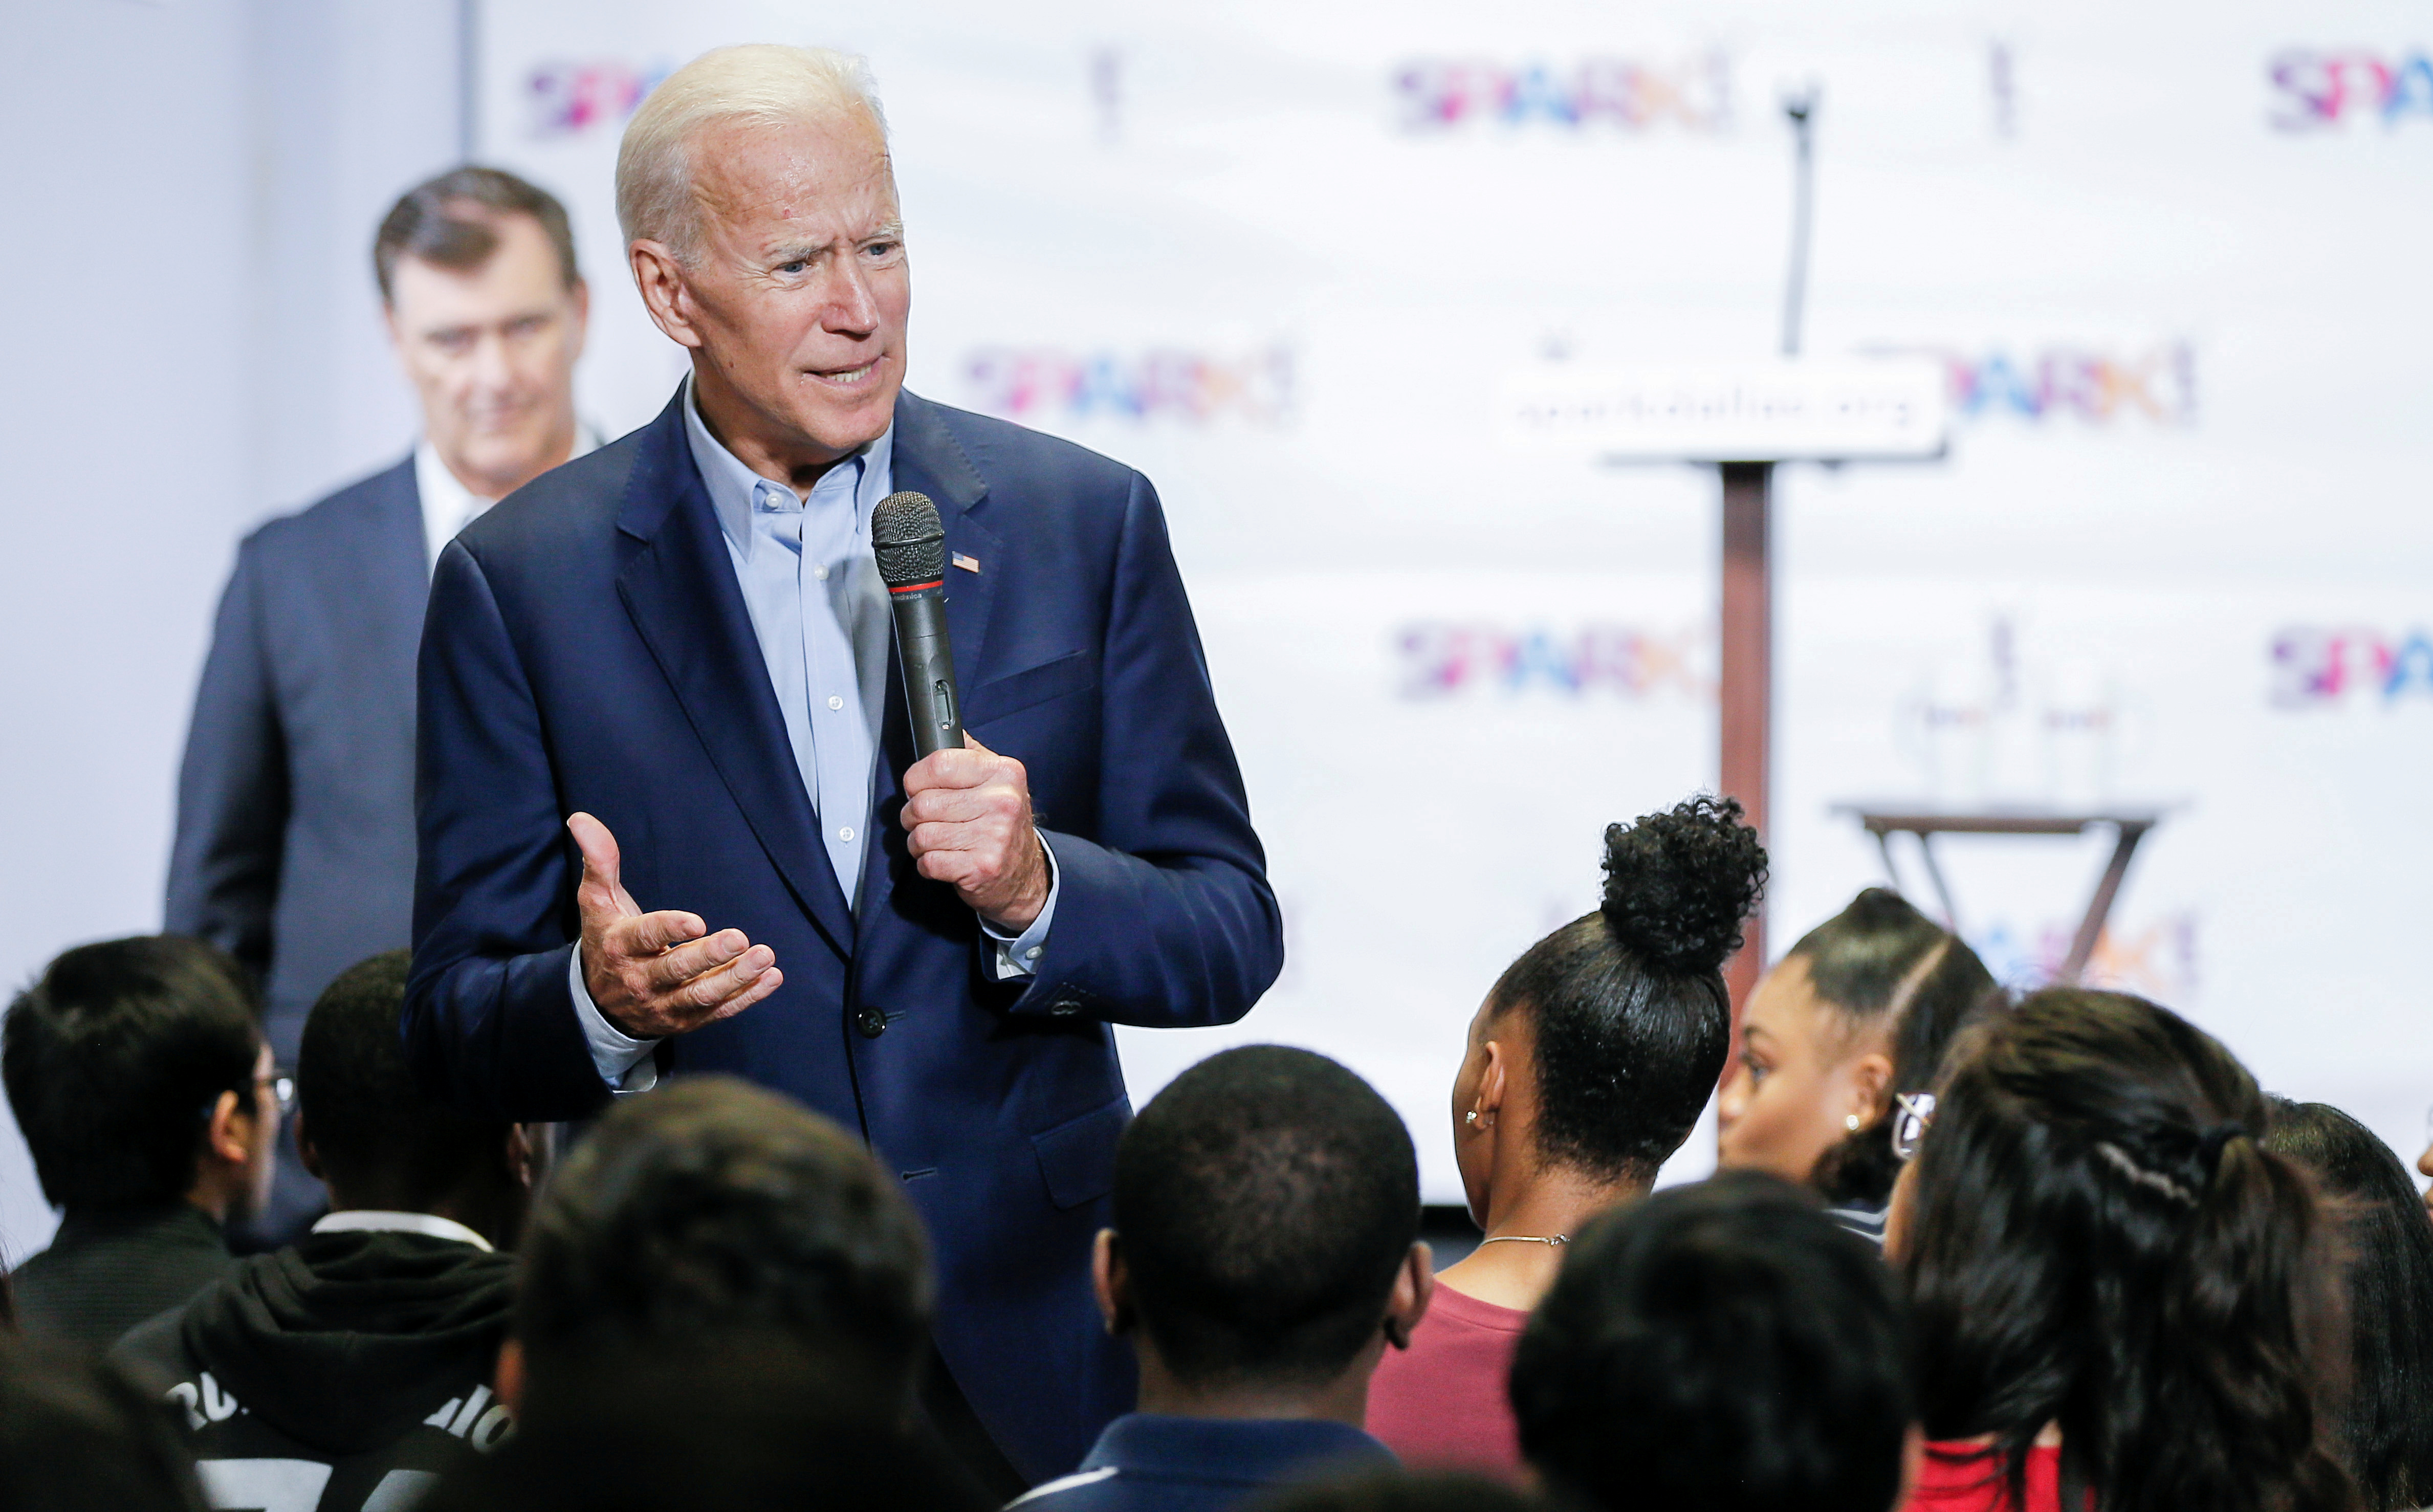 Democratic 2020 U.S. Presidential candidate Joe Biden campaigns at the SPARK! educational center in Dallas